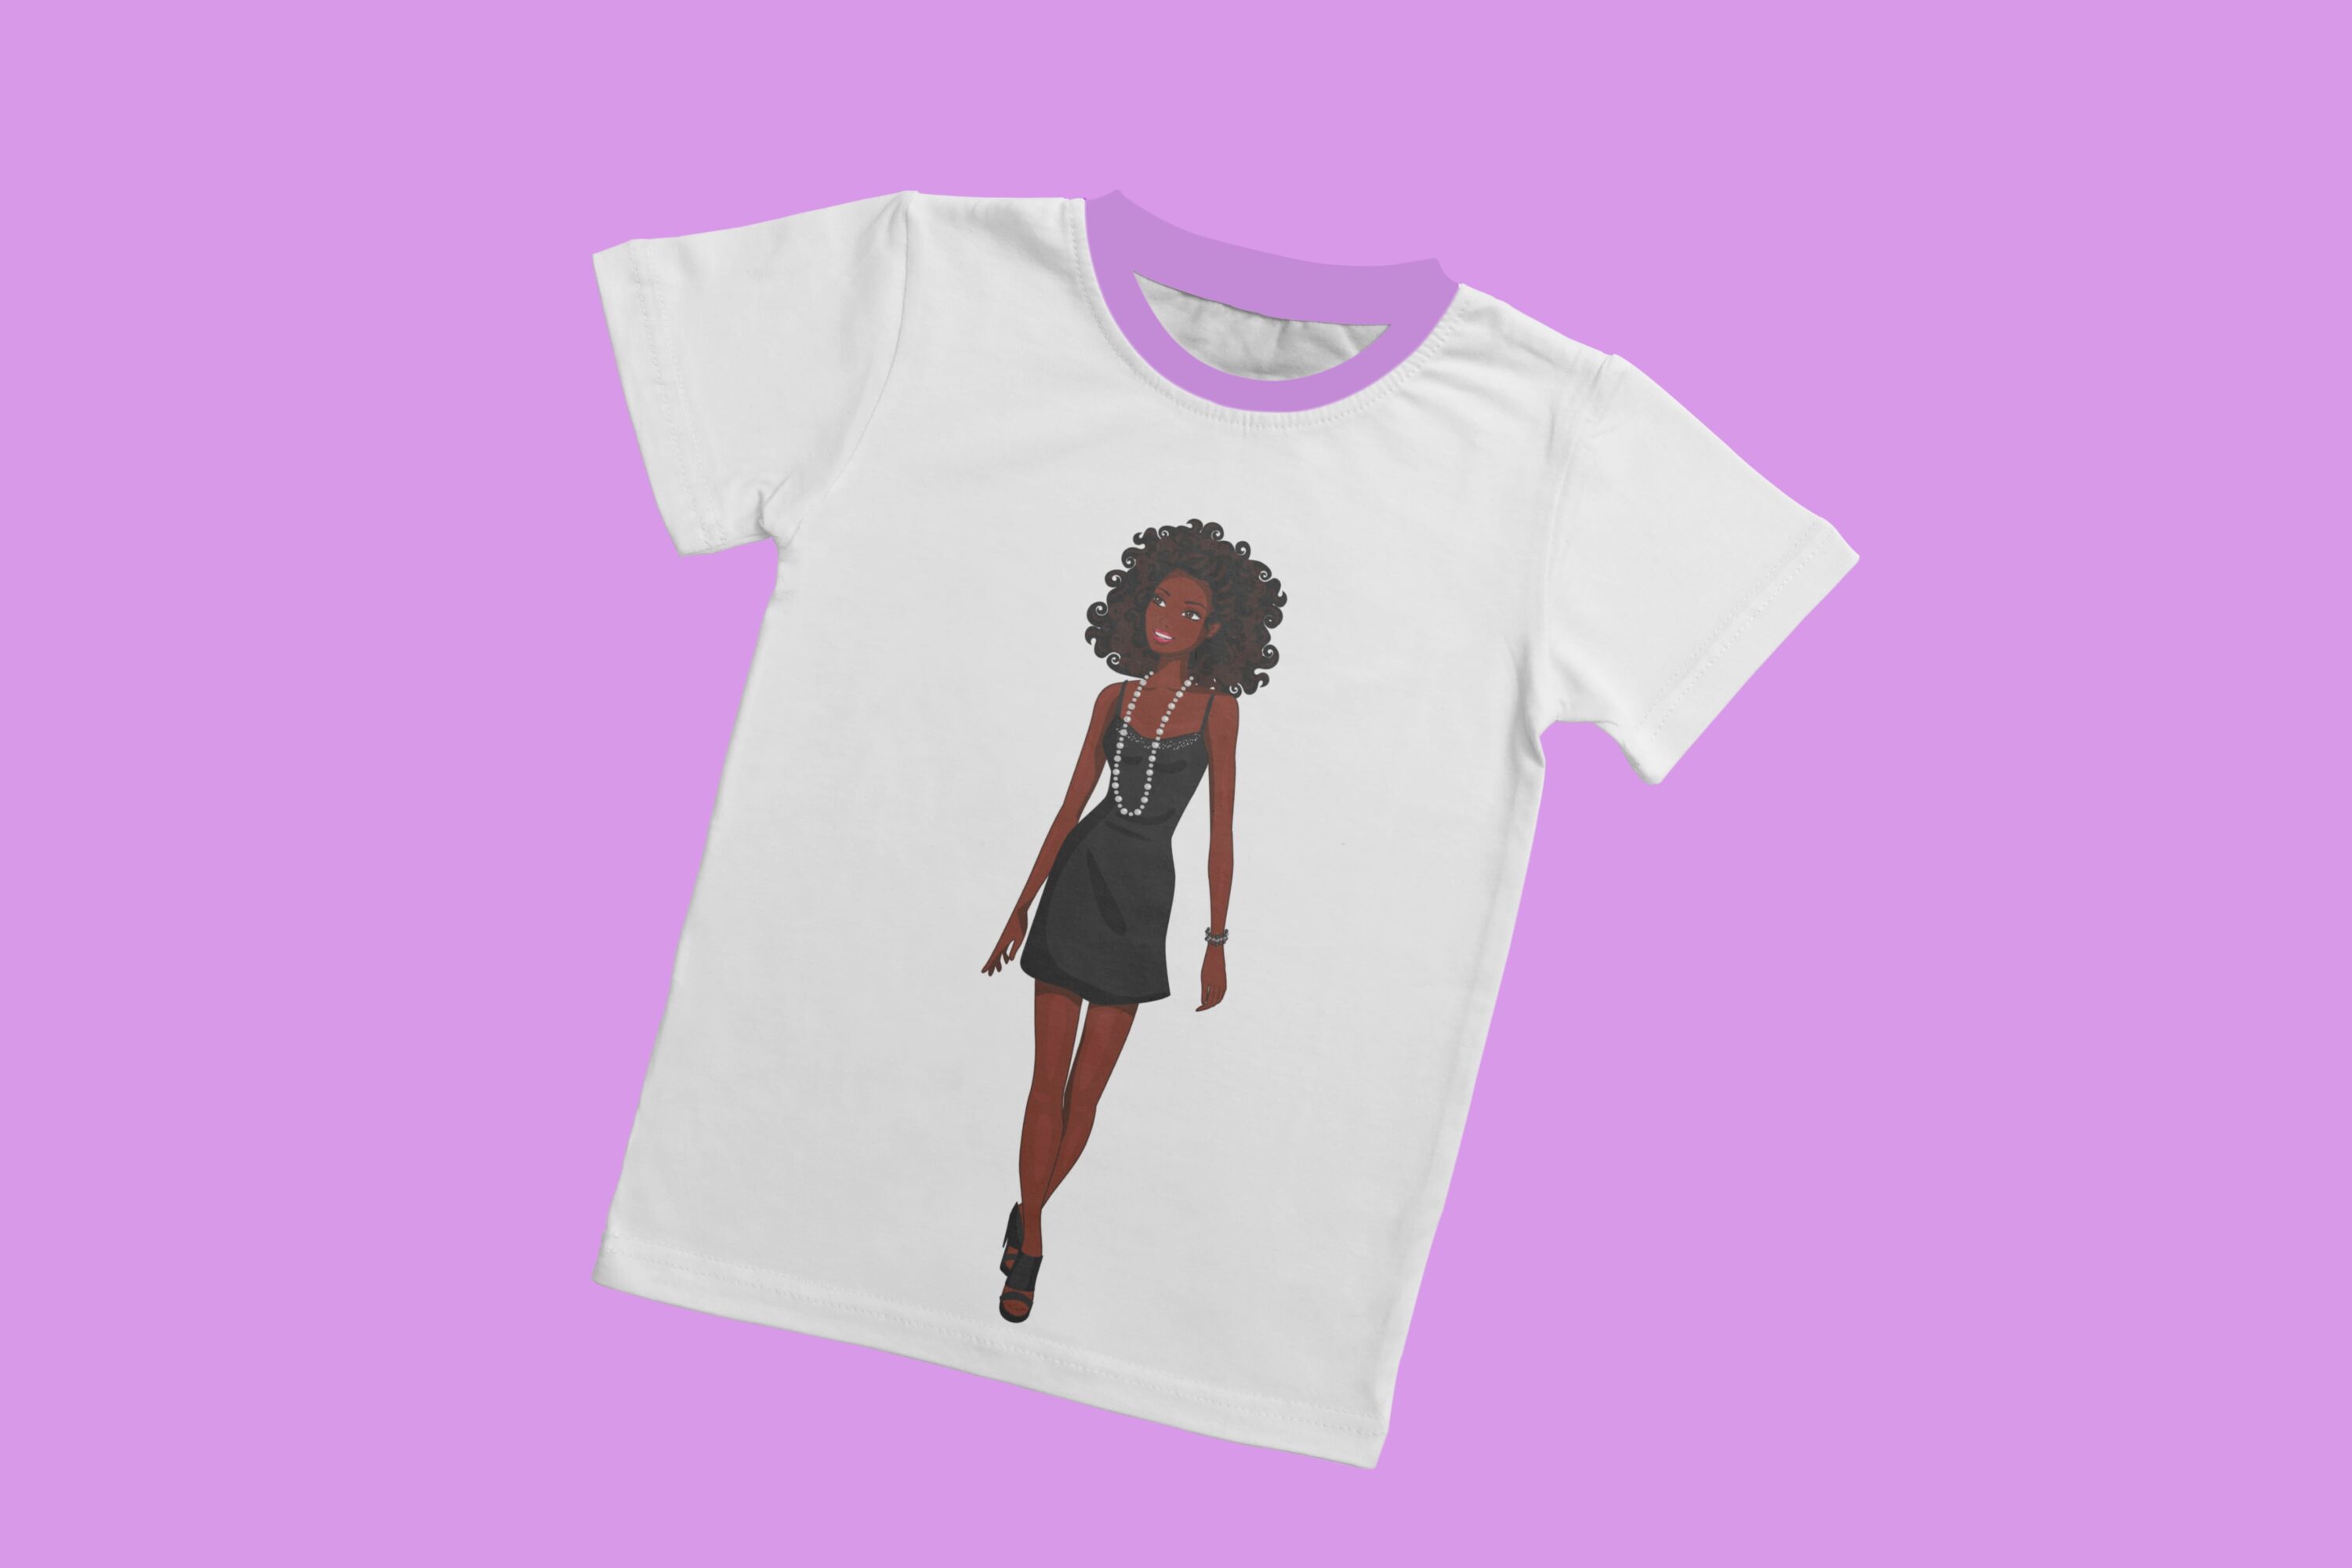 Print on a girl's t-shirt.